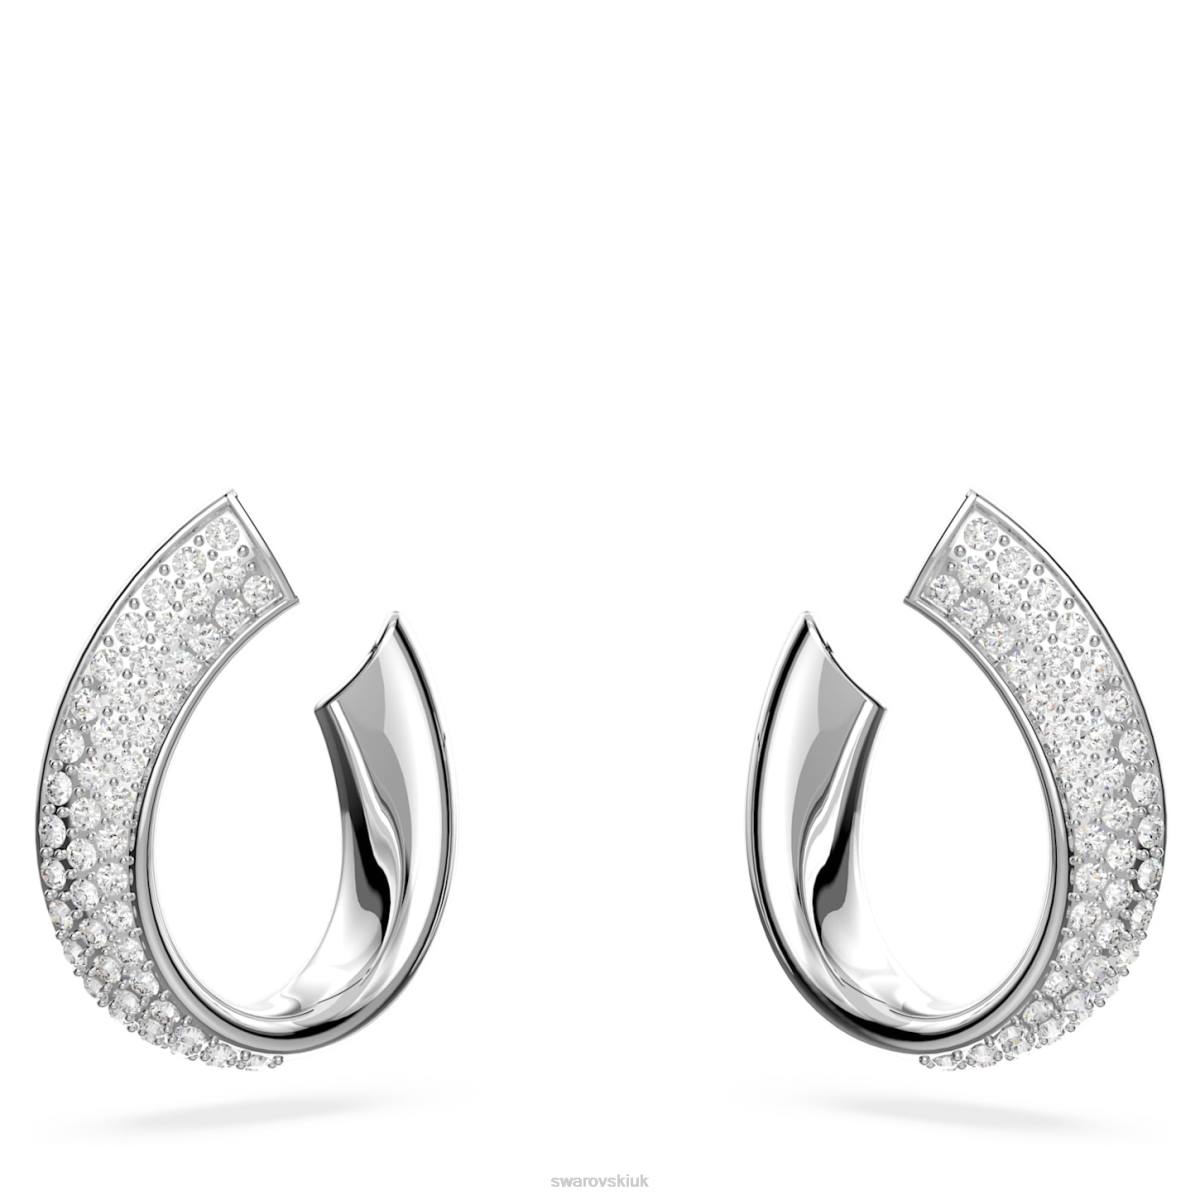 Jewelry Swarovski Exist hoop earrings White, Rhodium plated 48JX897